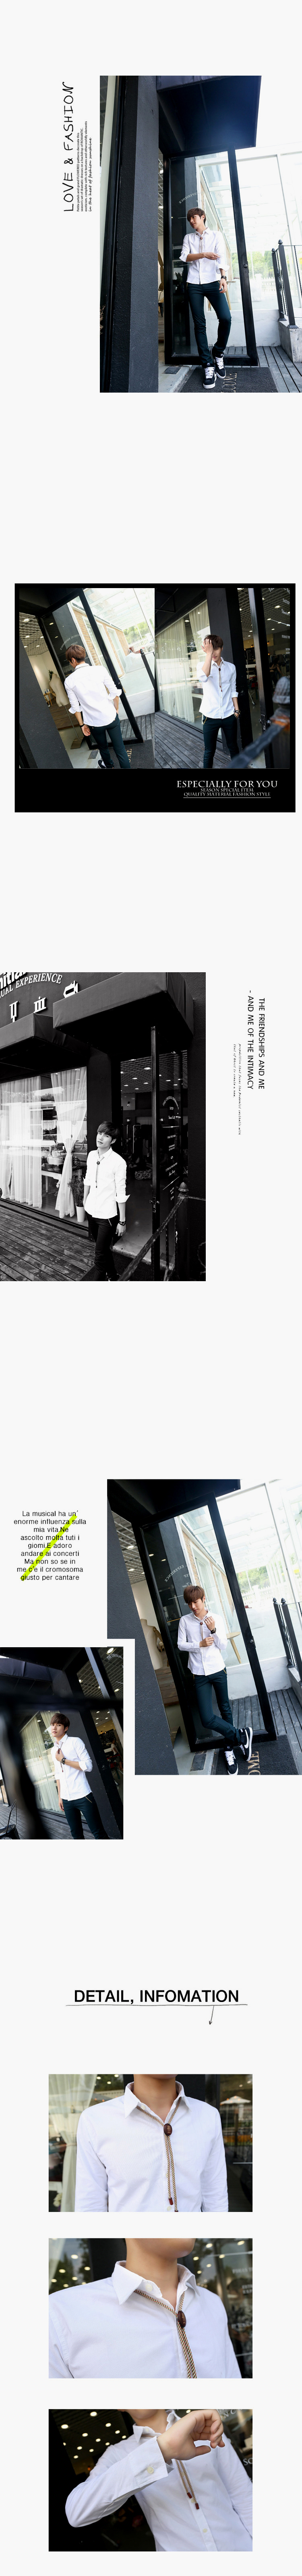 Mssefn 2014秋冬新款 日系 挂件装饰 纯棉衬衫韩版潮男士修身长袖衬衫潮男衬衫C218